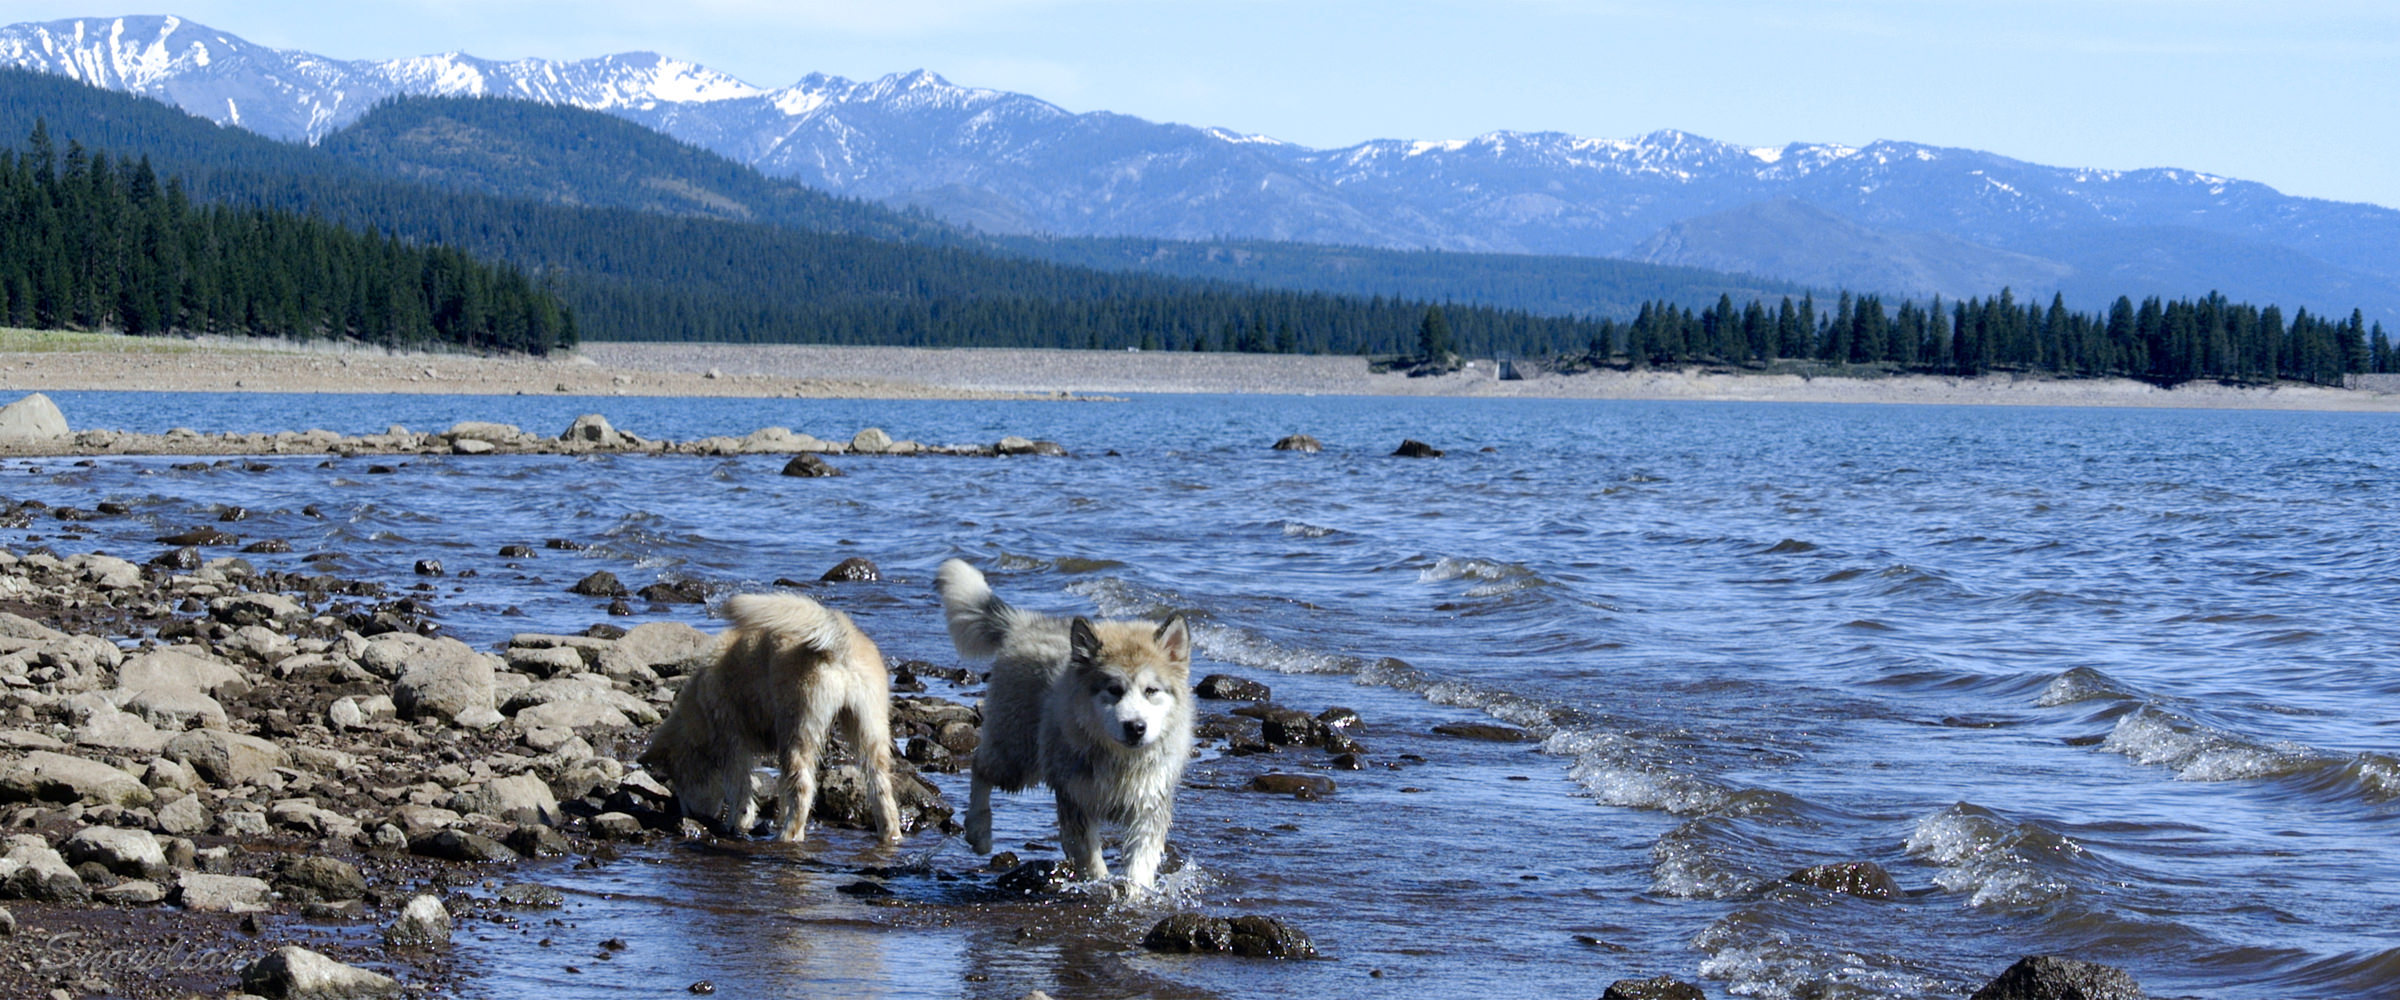 Alaskan Malamutes available for adoption through Snowlion Kennels